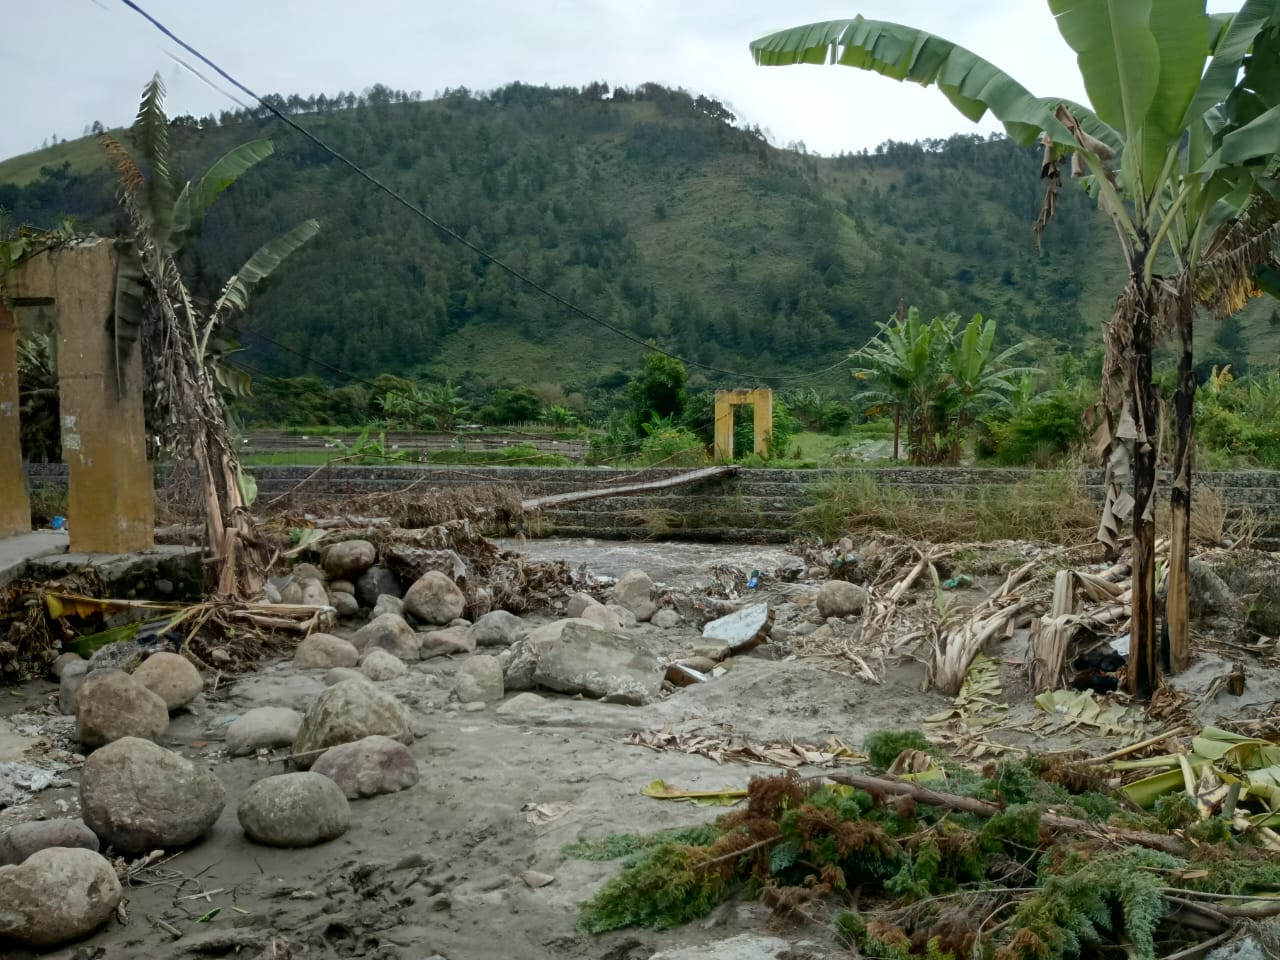 Banjir Bandang Di Baktiraja dan Kerusakan Hutan Di Hulu Aek Silang